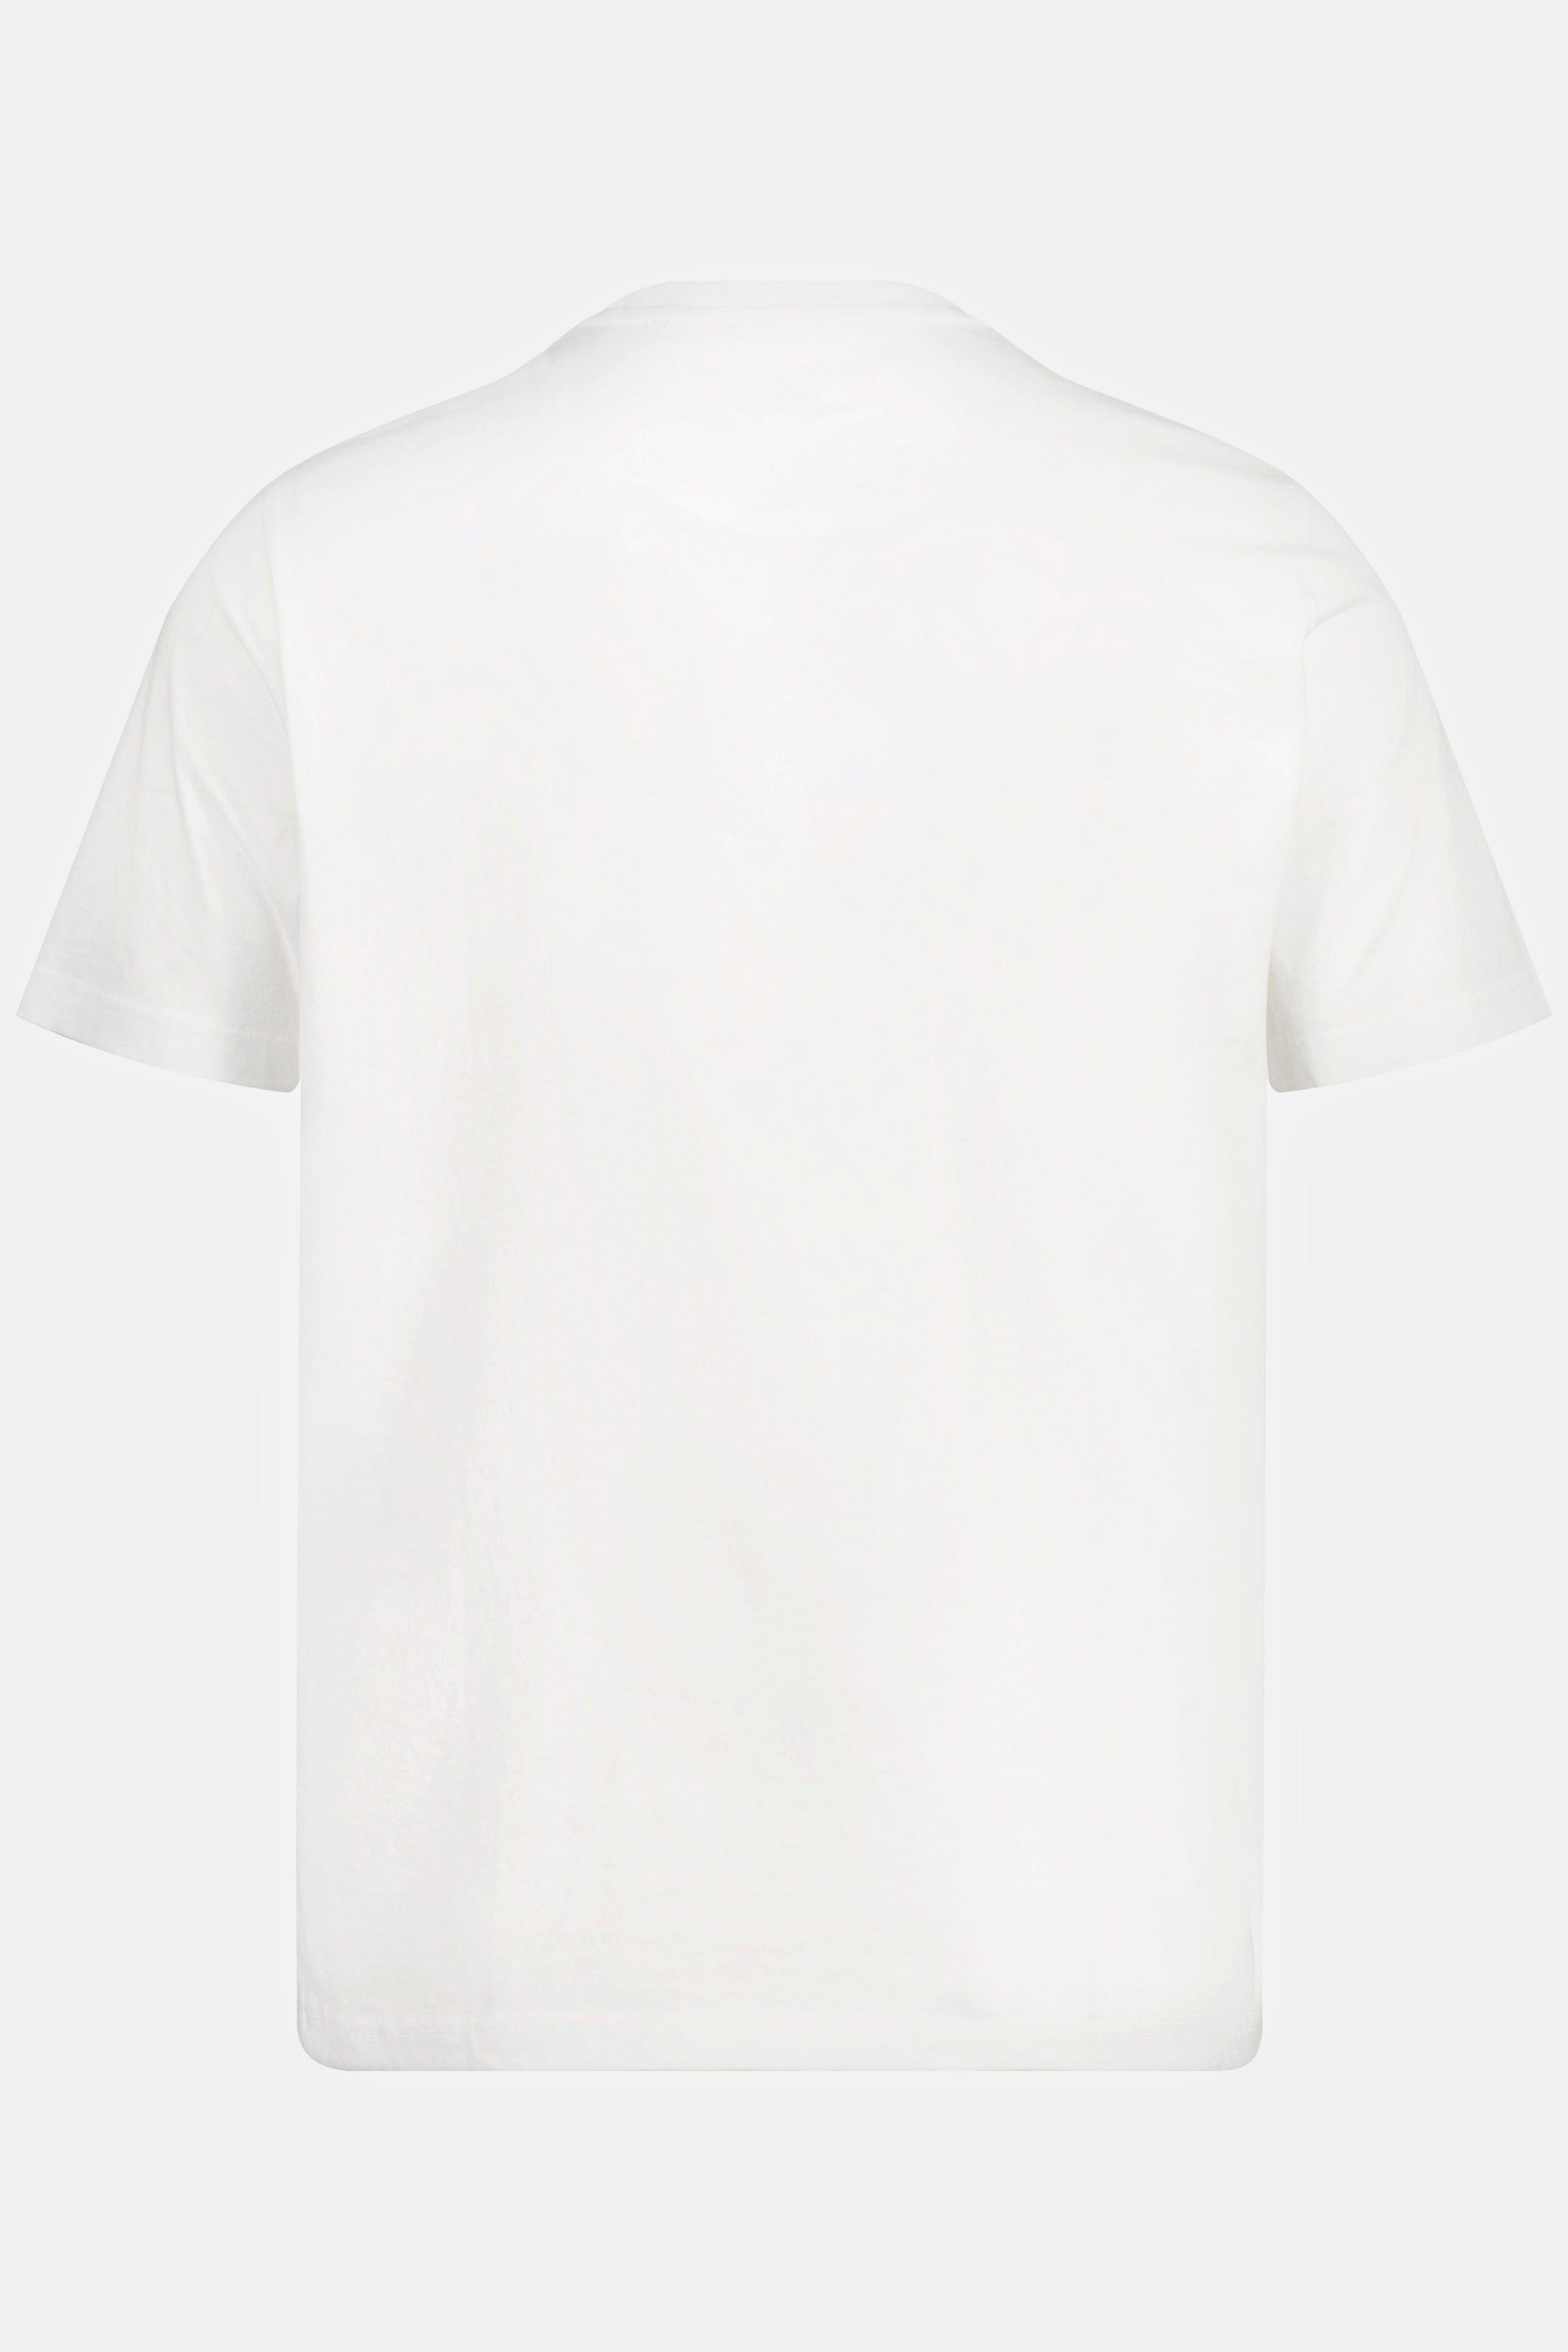 T-Shirt Halbarm JP1880 Trekking-Shirt Outdoor Berg Print